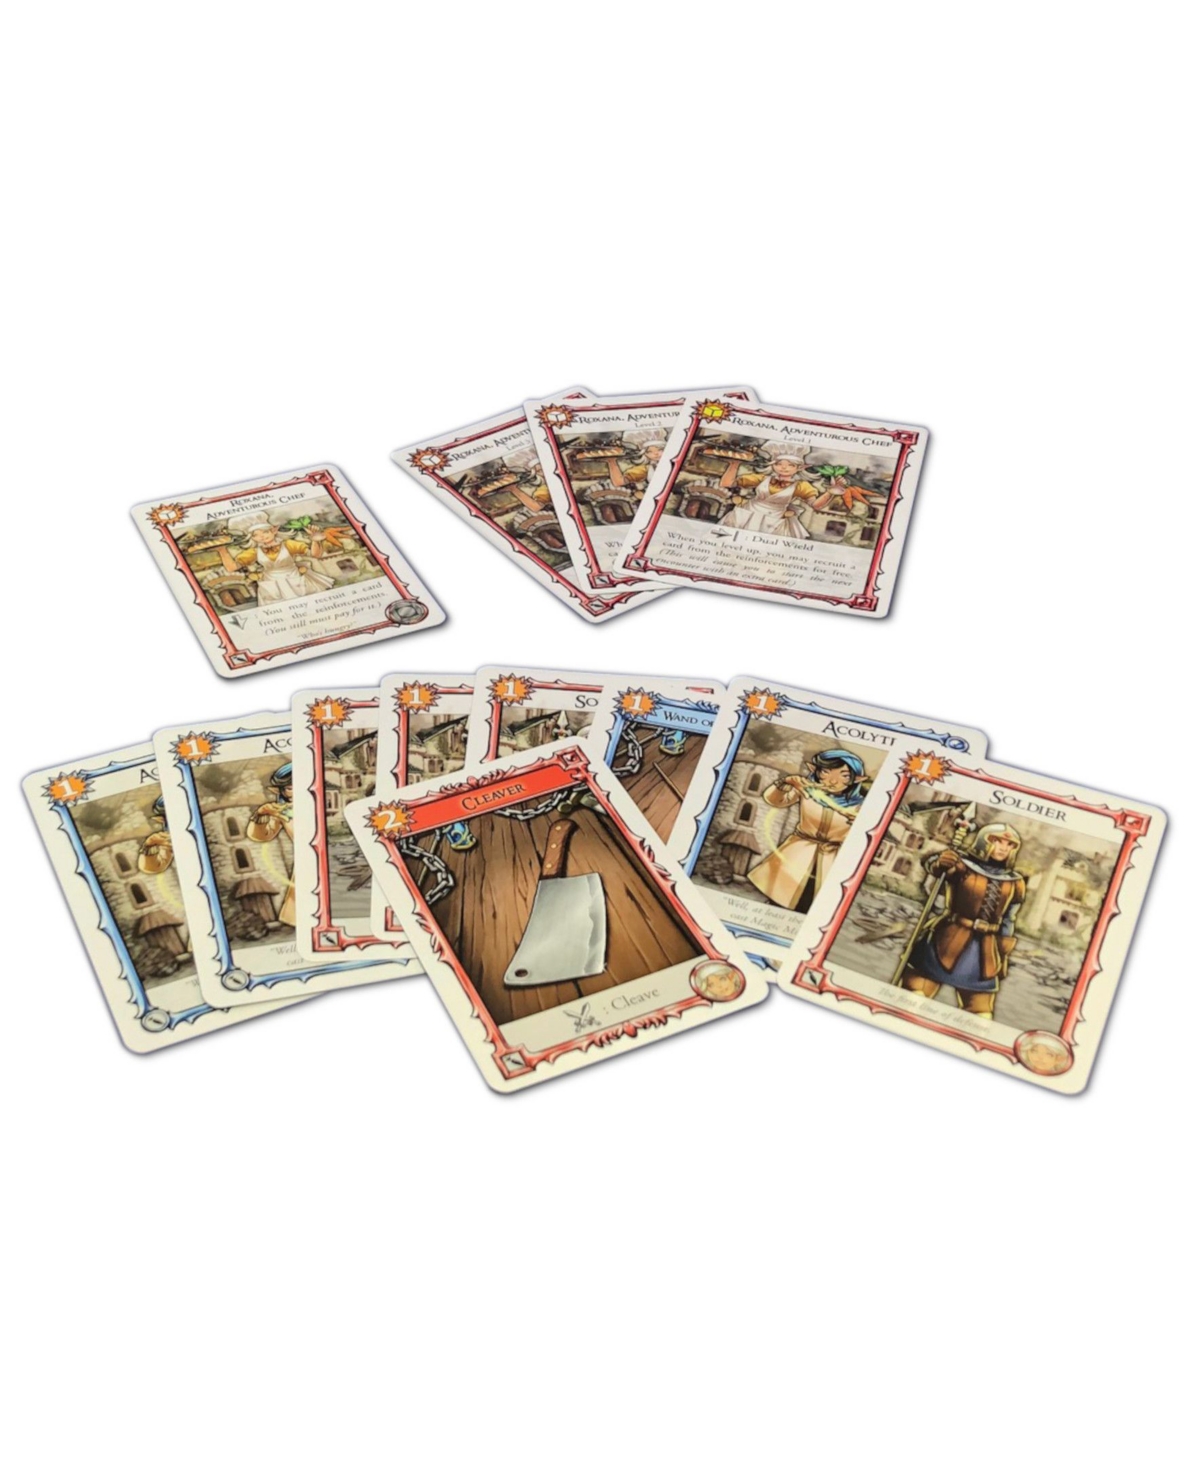 Shop Masterpieces Puzzles Slugest Games Red Dragon Inn- Smorgasbox Board Game In Multi